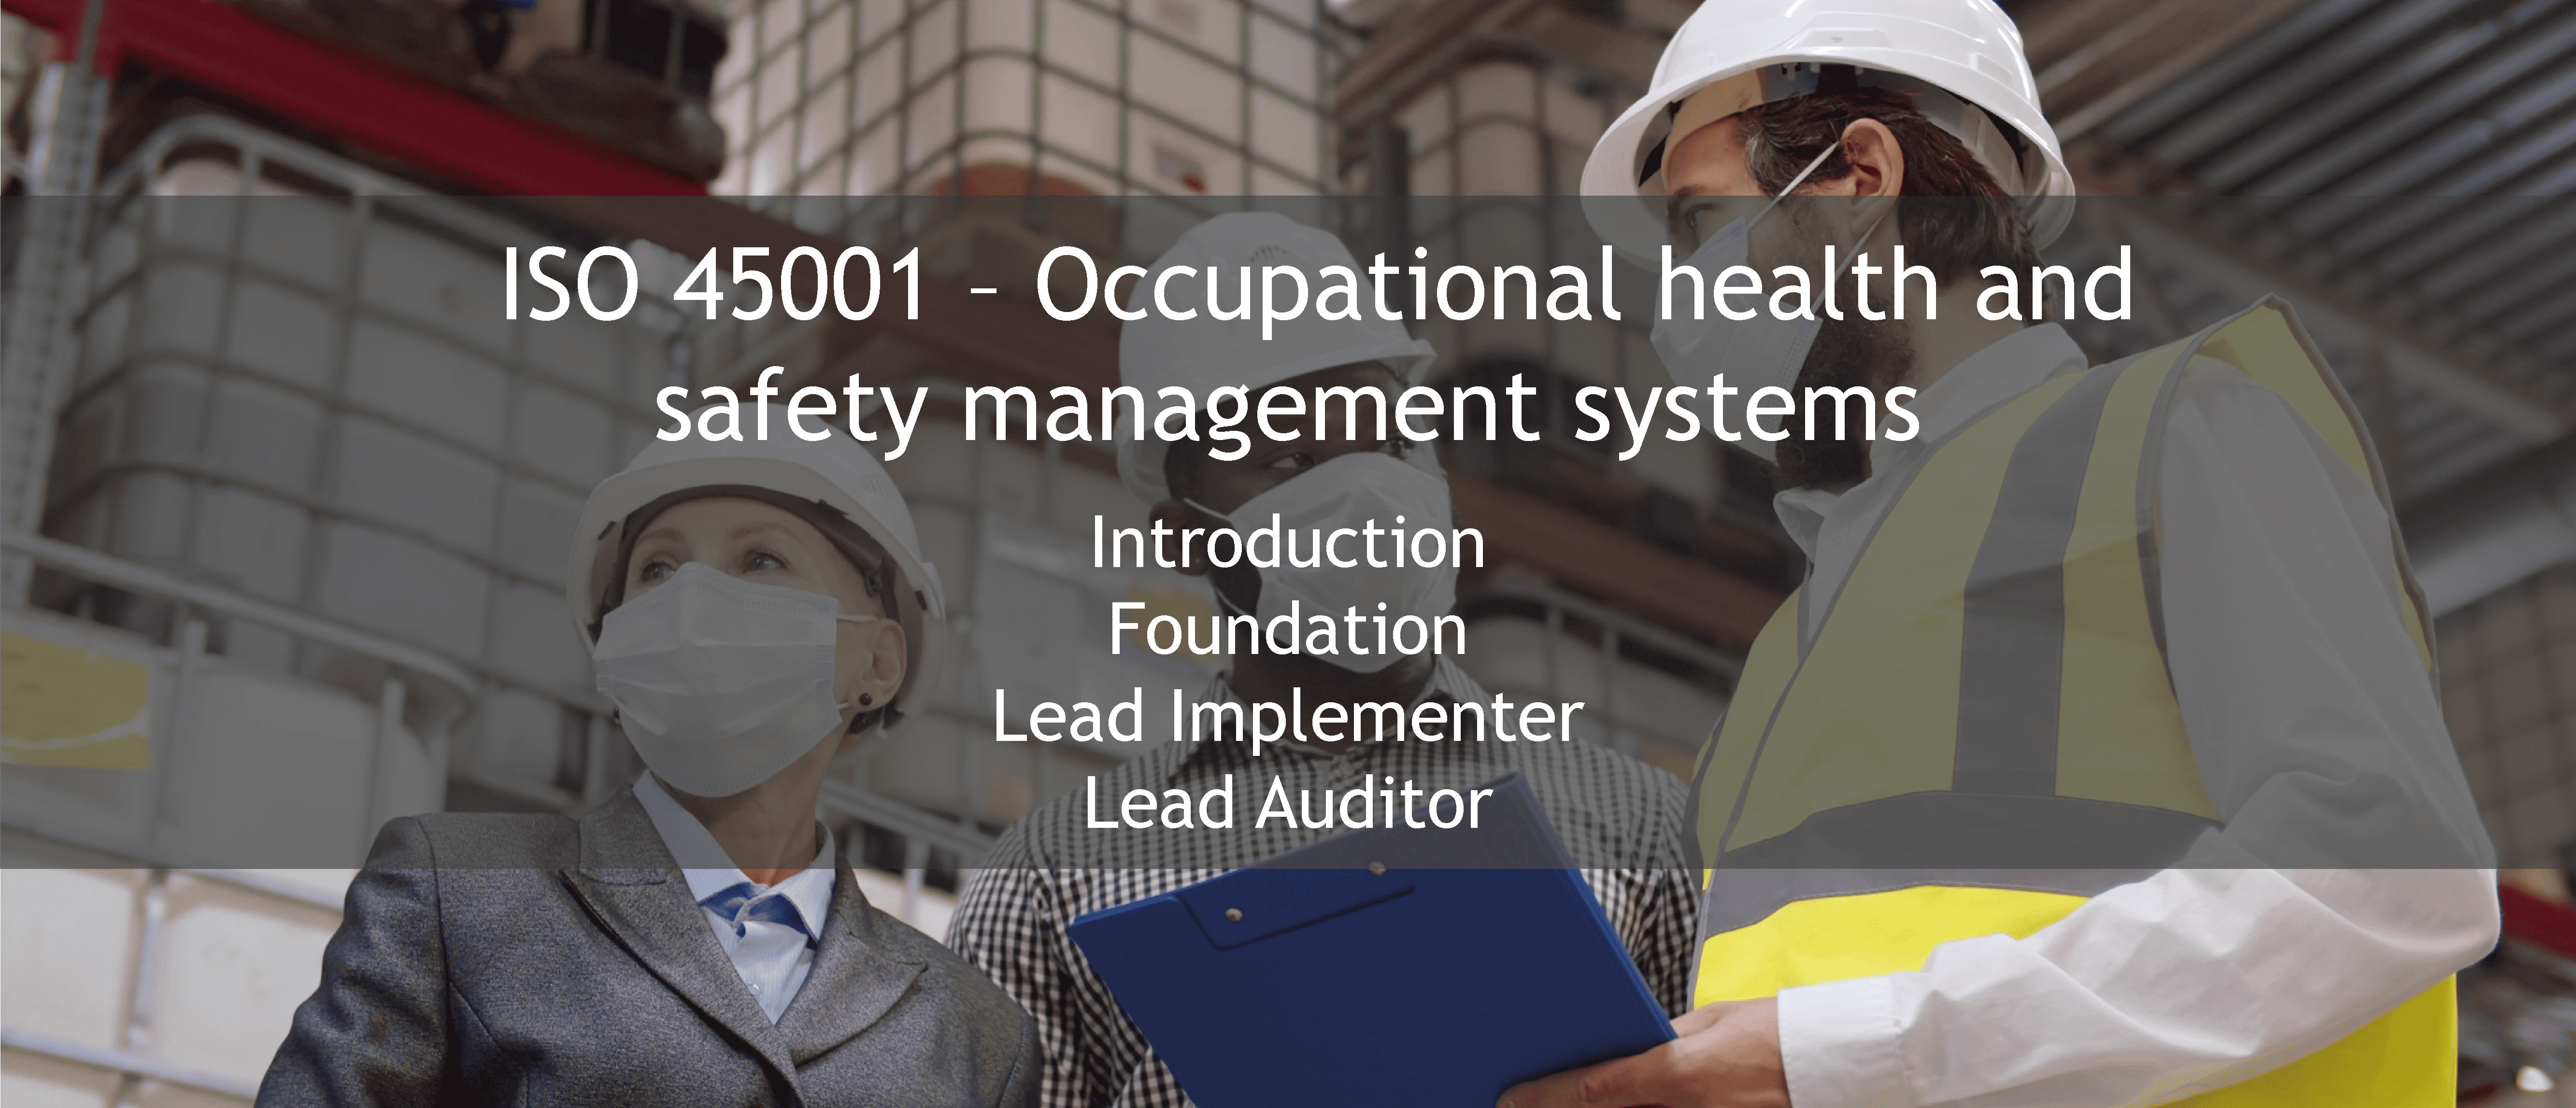 ISO 45001 training offer - ISO 50001 Energy Management System